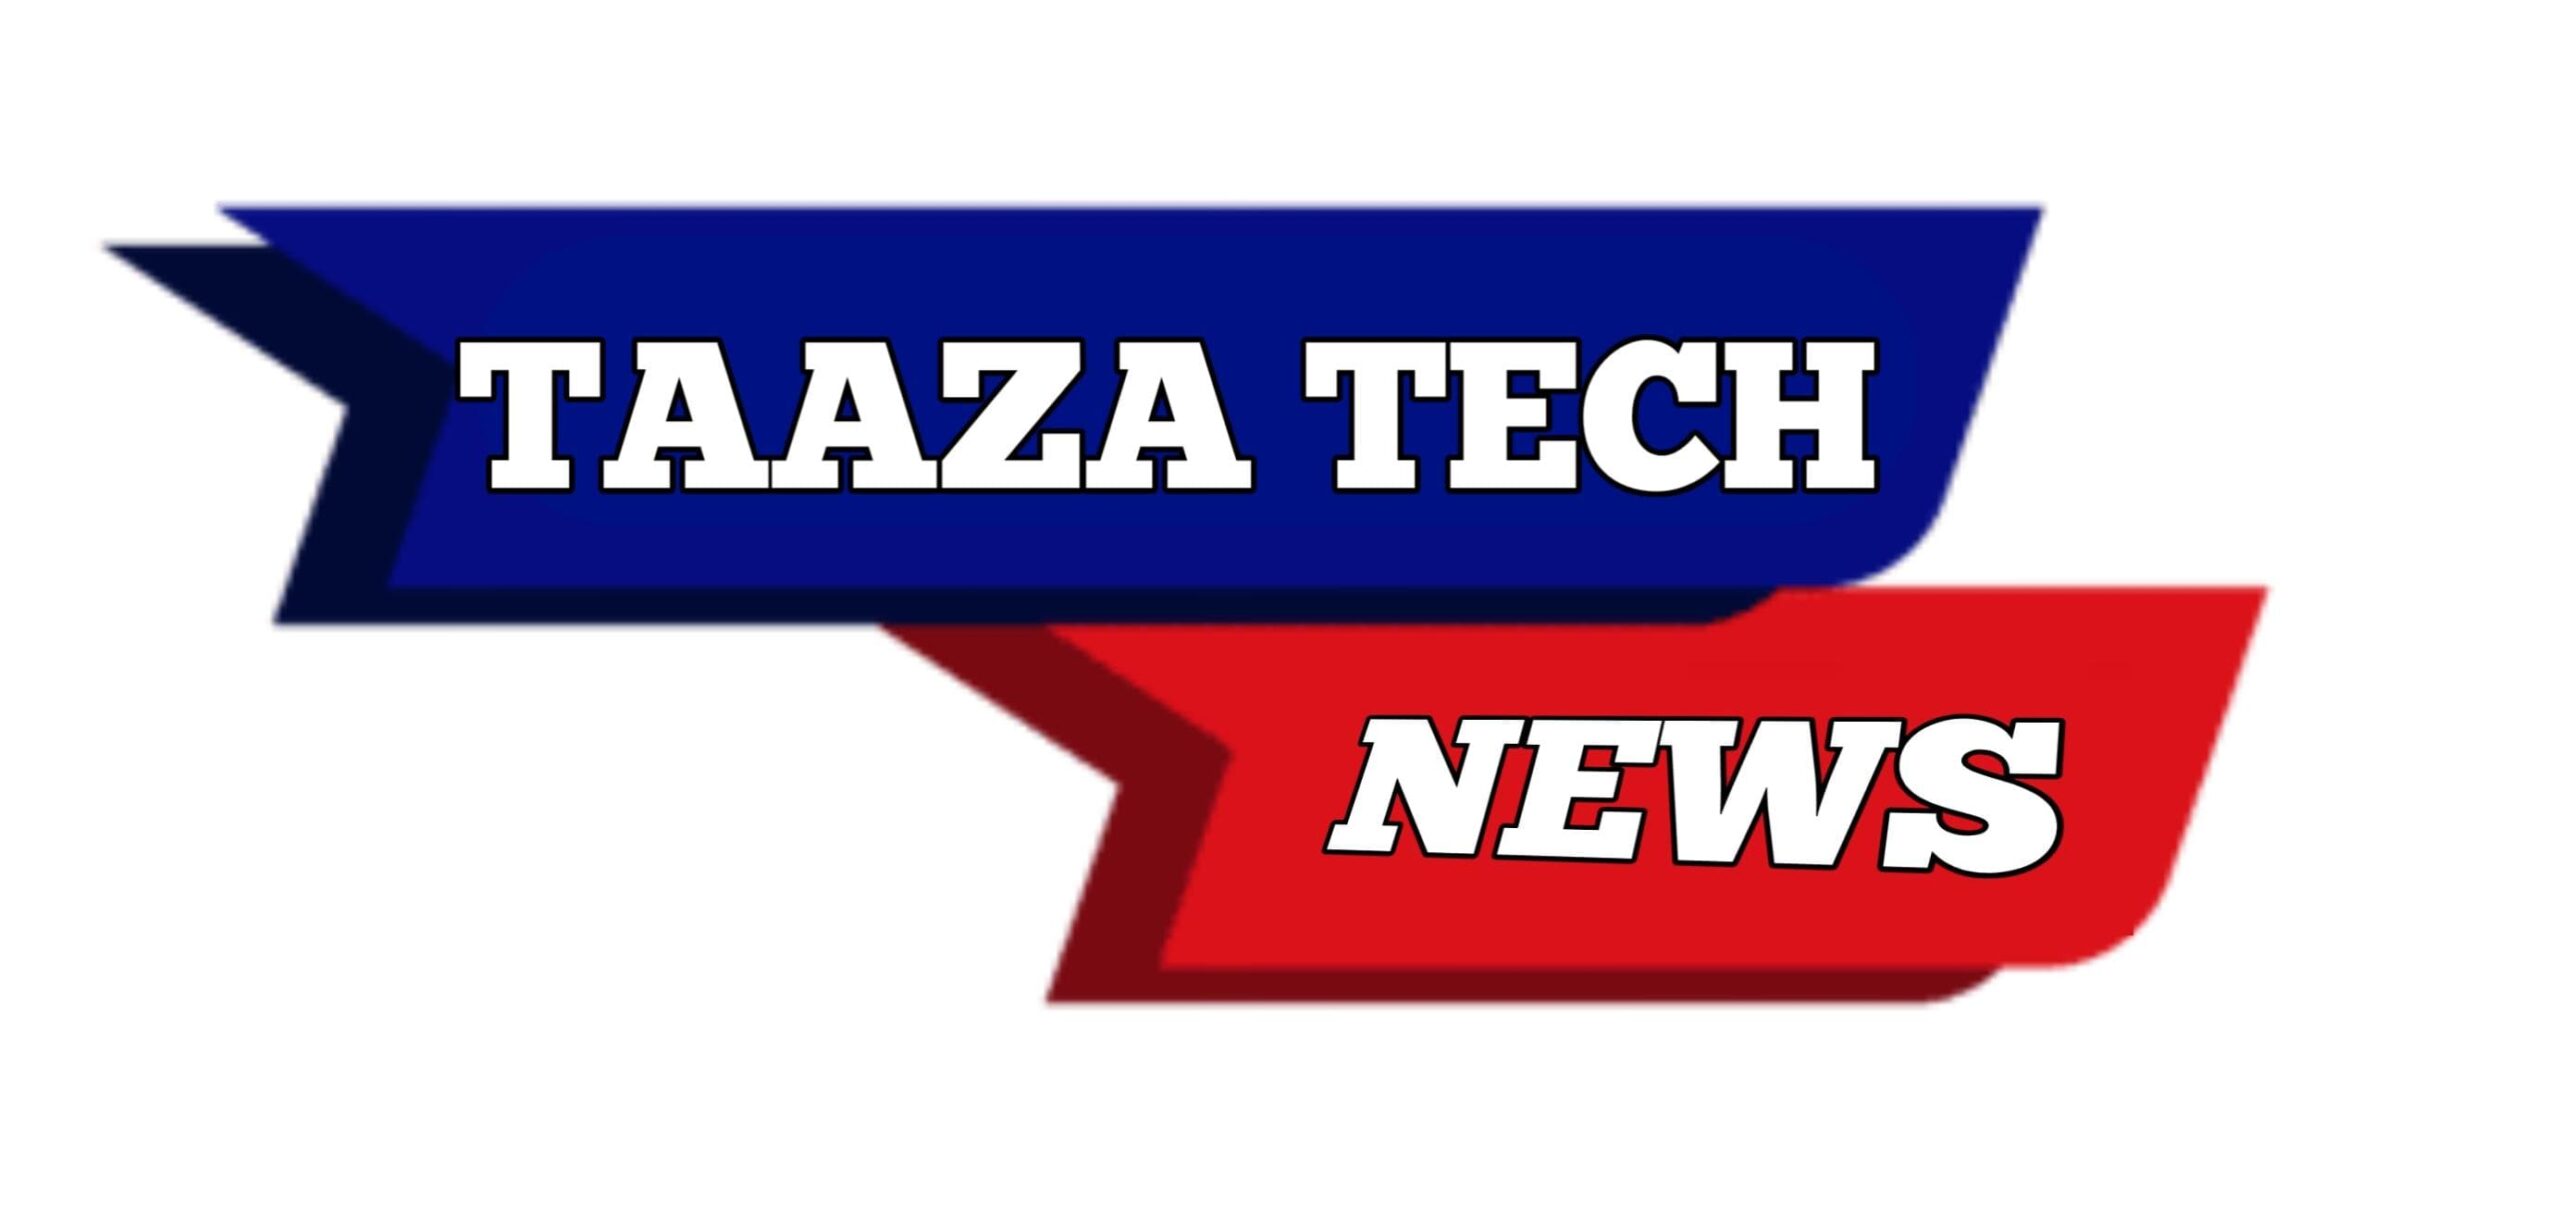 Taaza Tech News